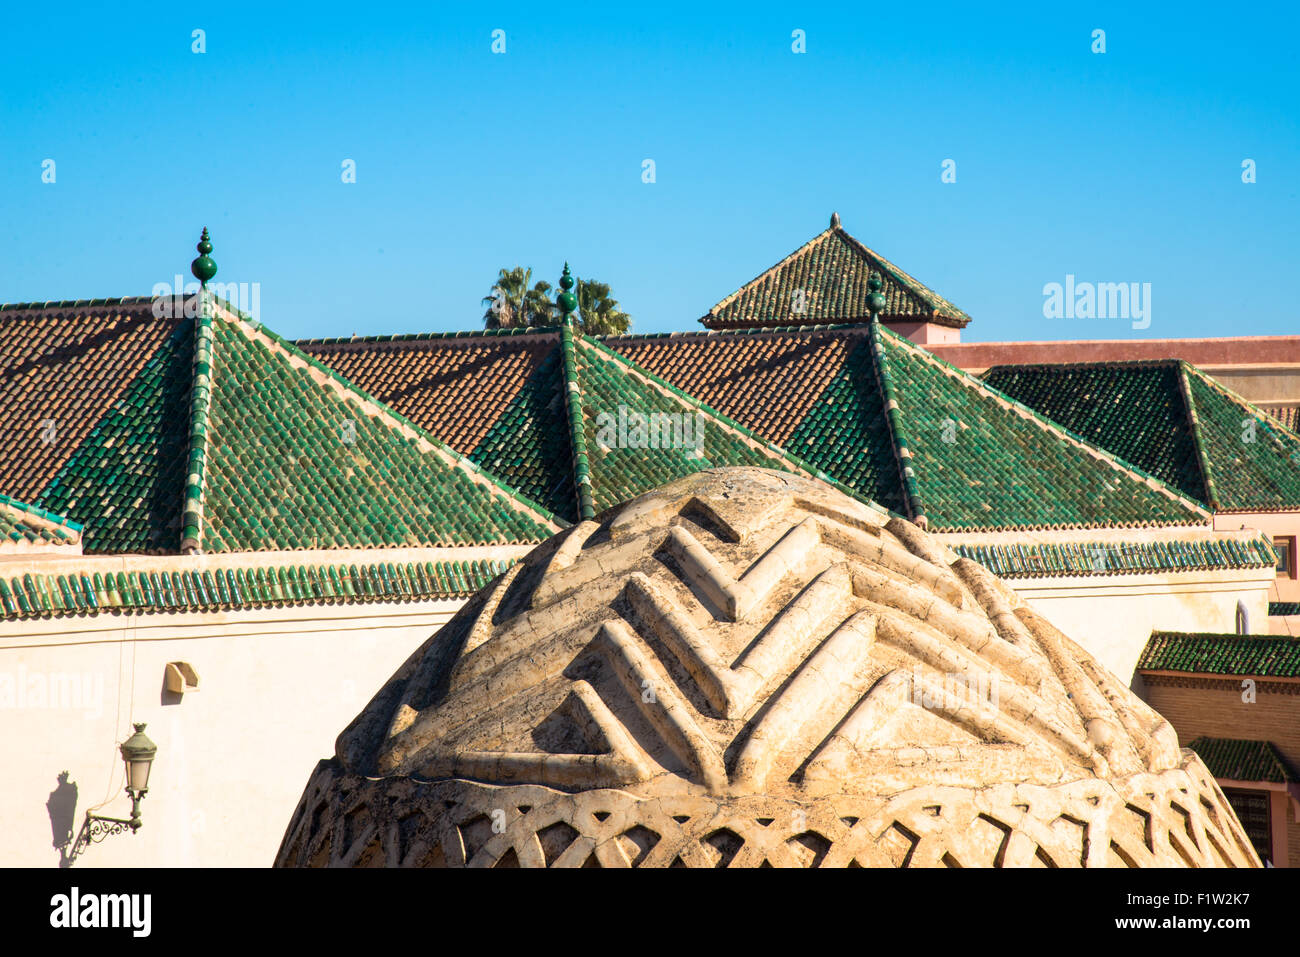 green tiles at rooftops in marrakesh maroc Stock Photo